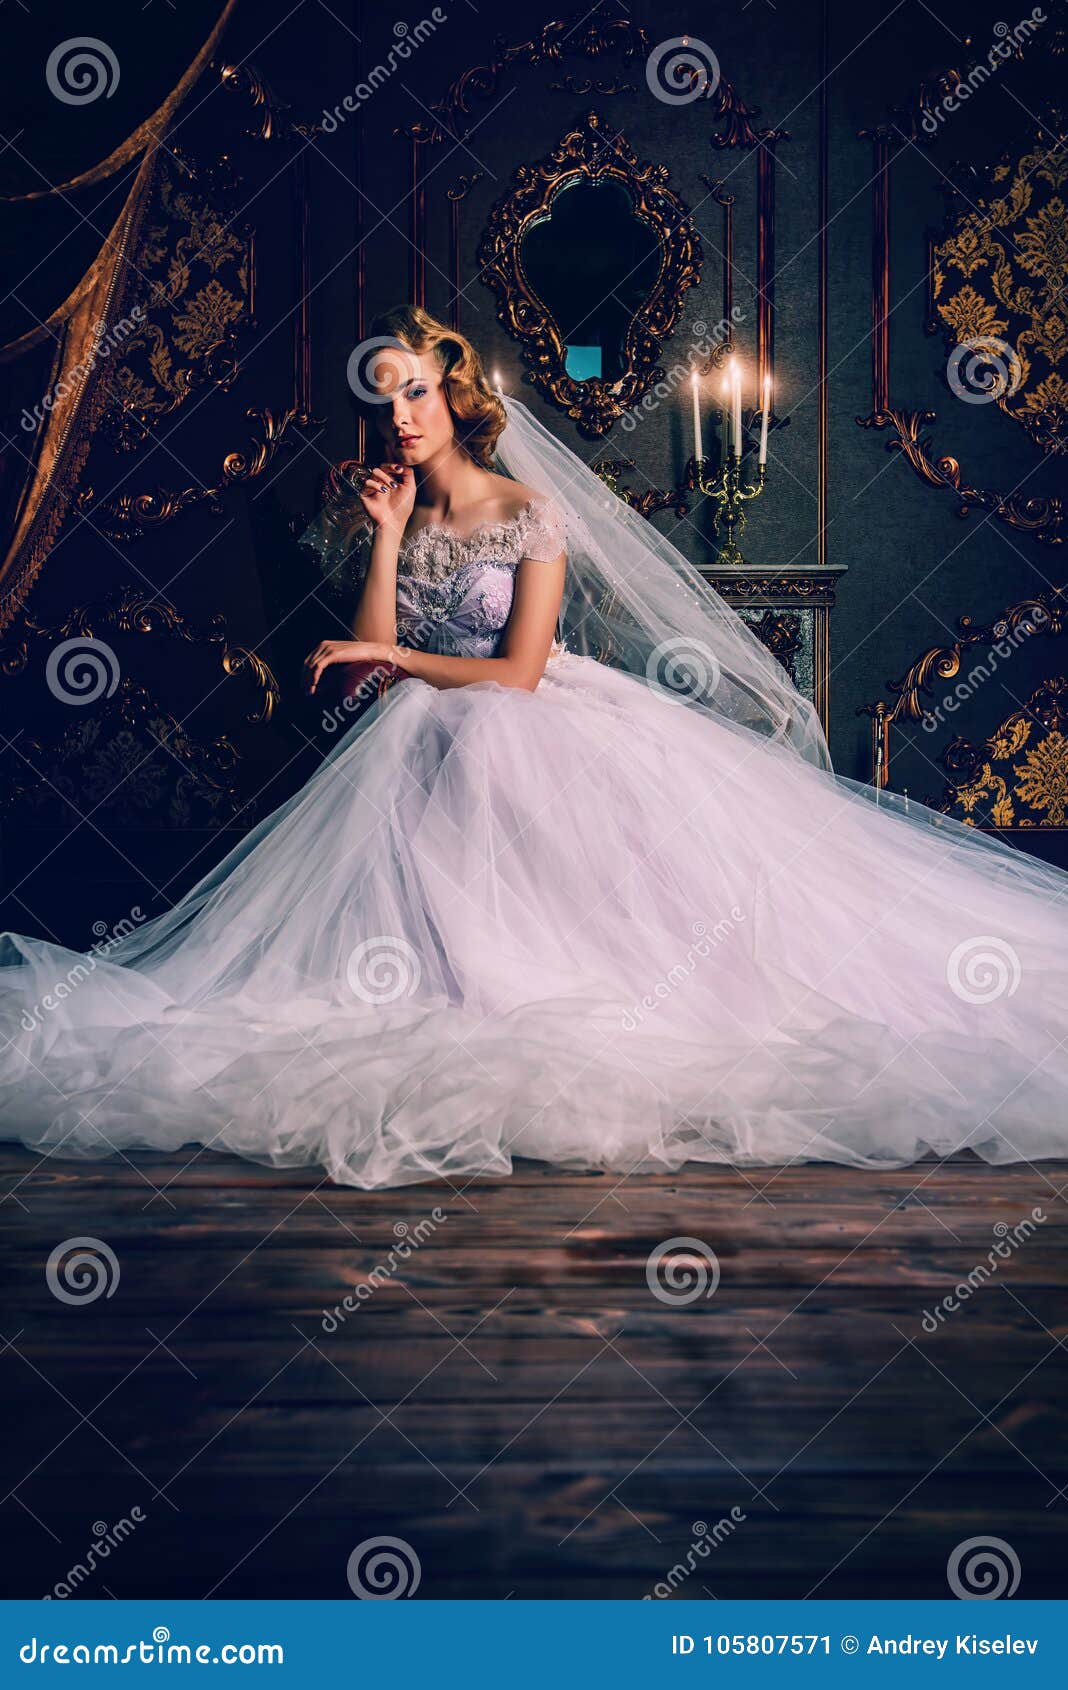 charming bride woman